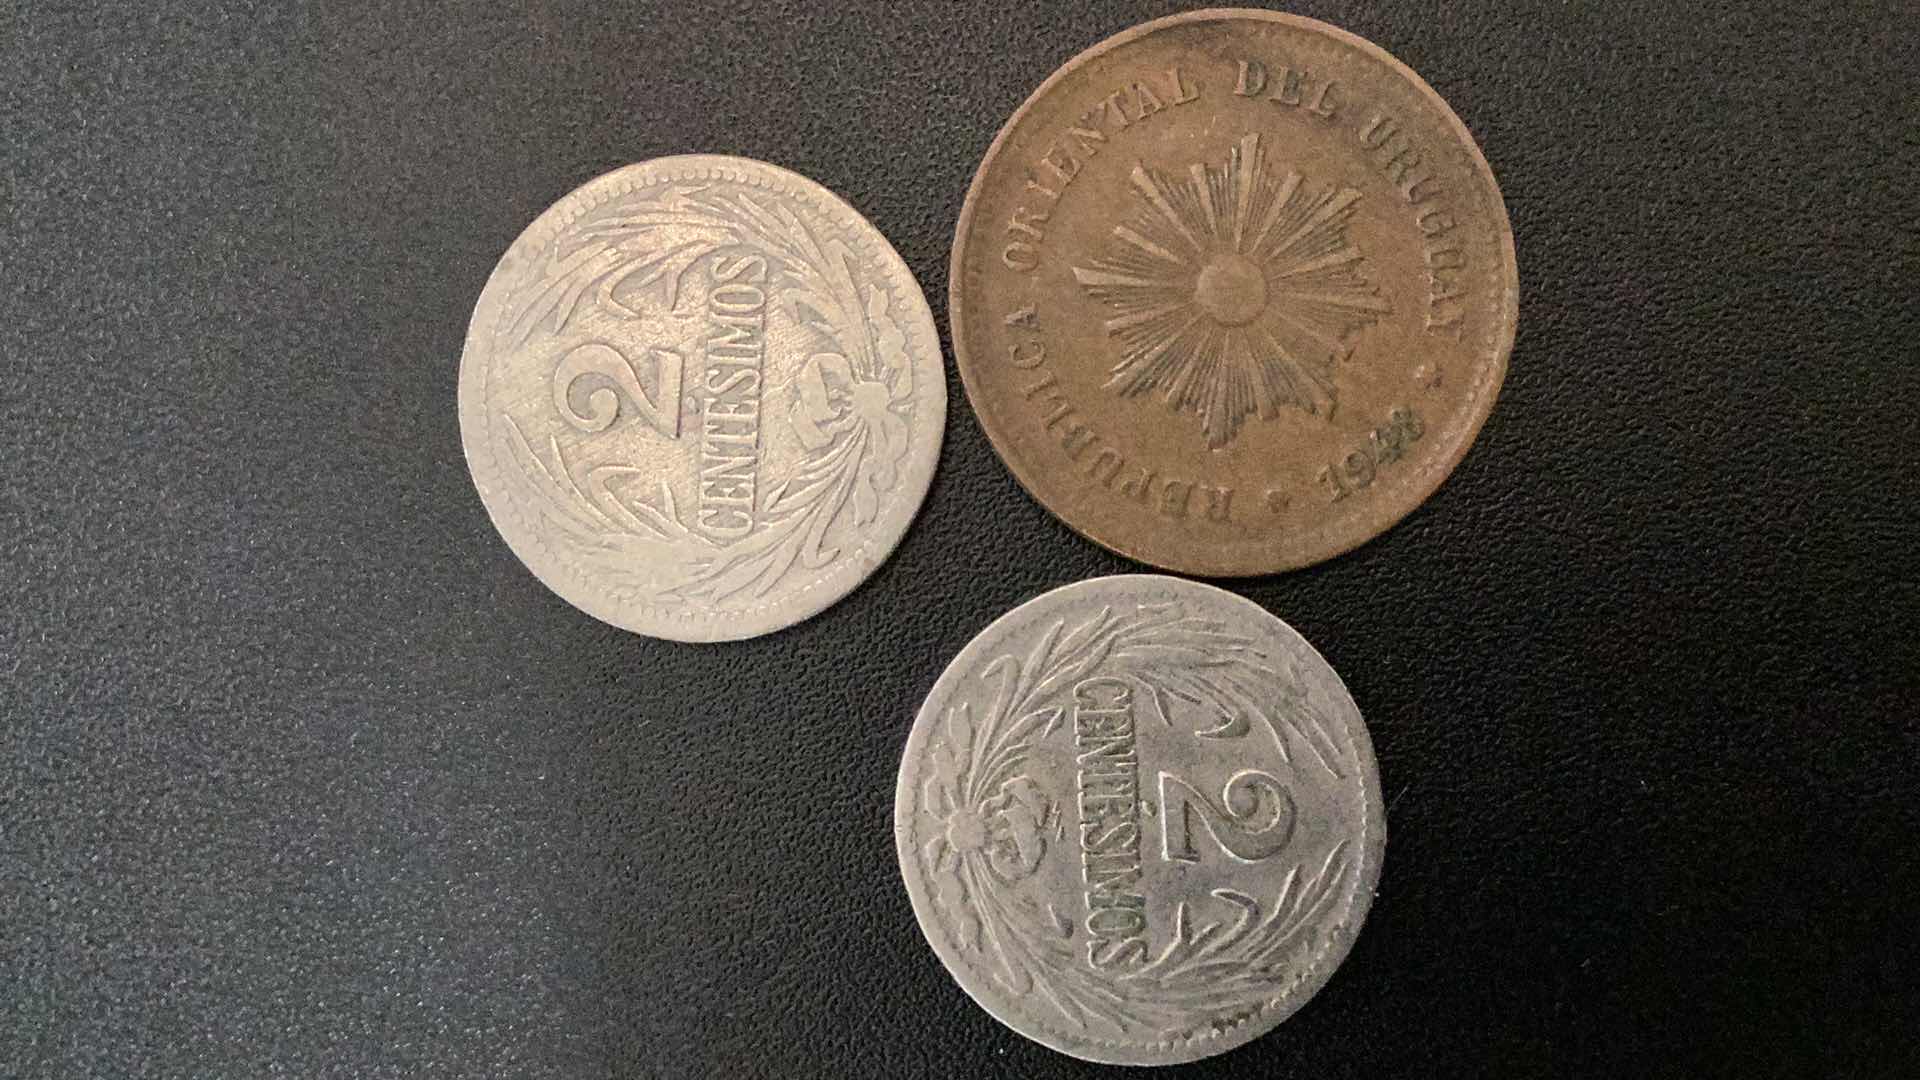 Photo 1 of 3 COLLECTIBLE COINS - URUGUAY 1909, 1924, 1948